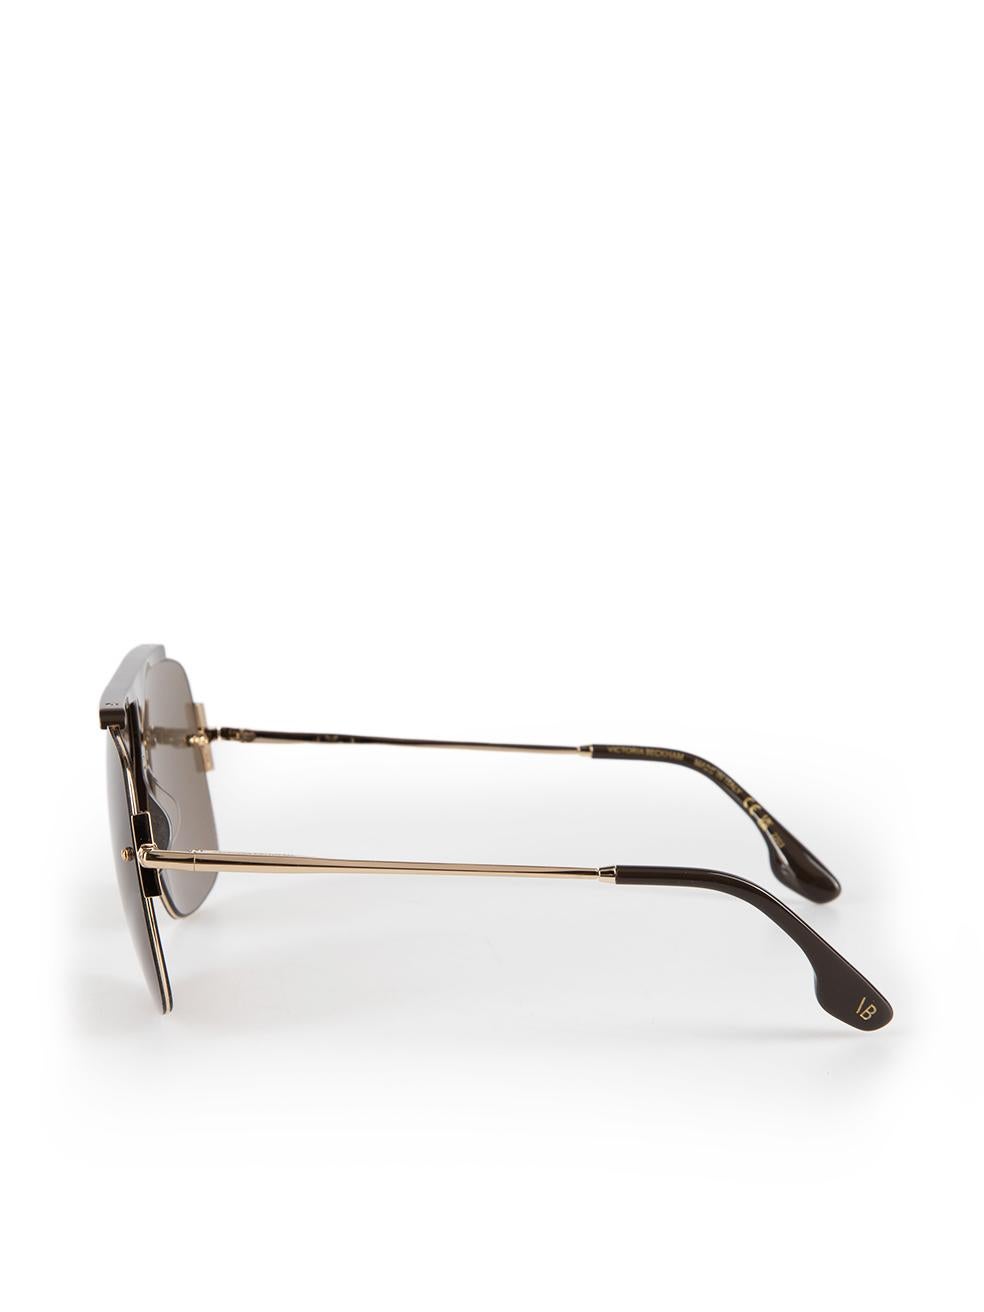 Victoria Beckham Mocha Navigator Sunglasses For Sale 1